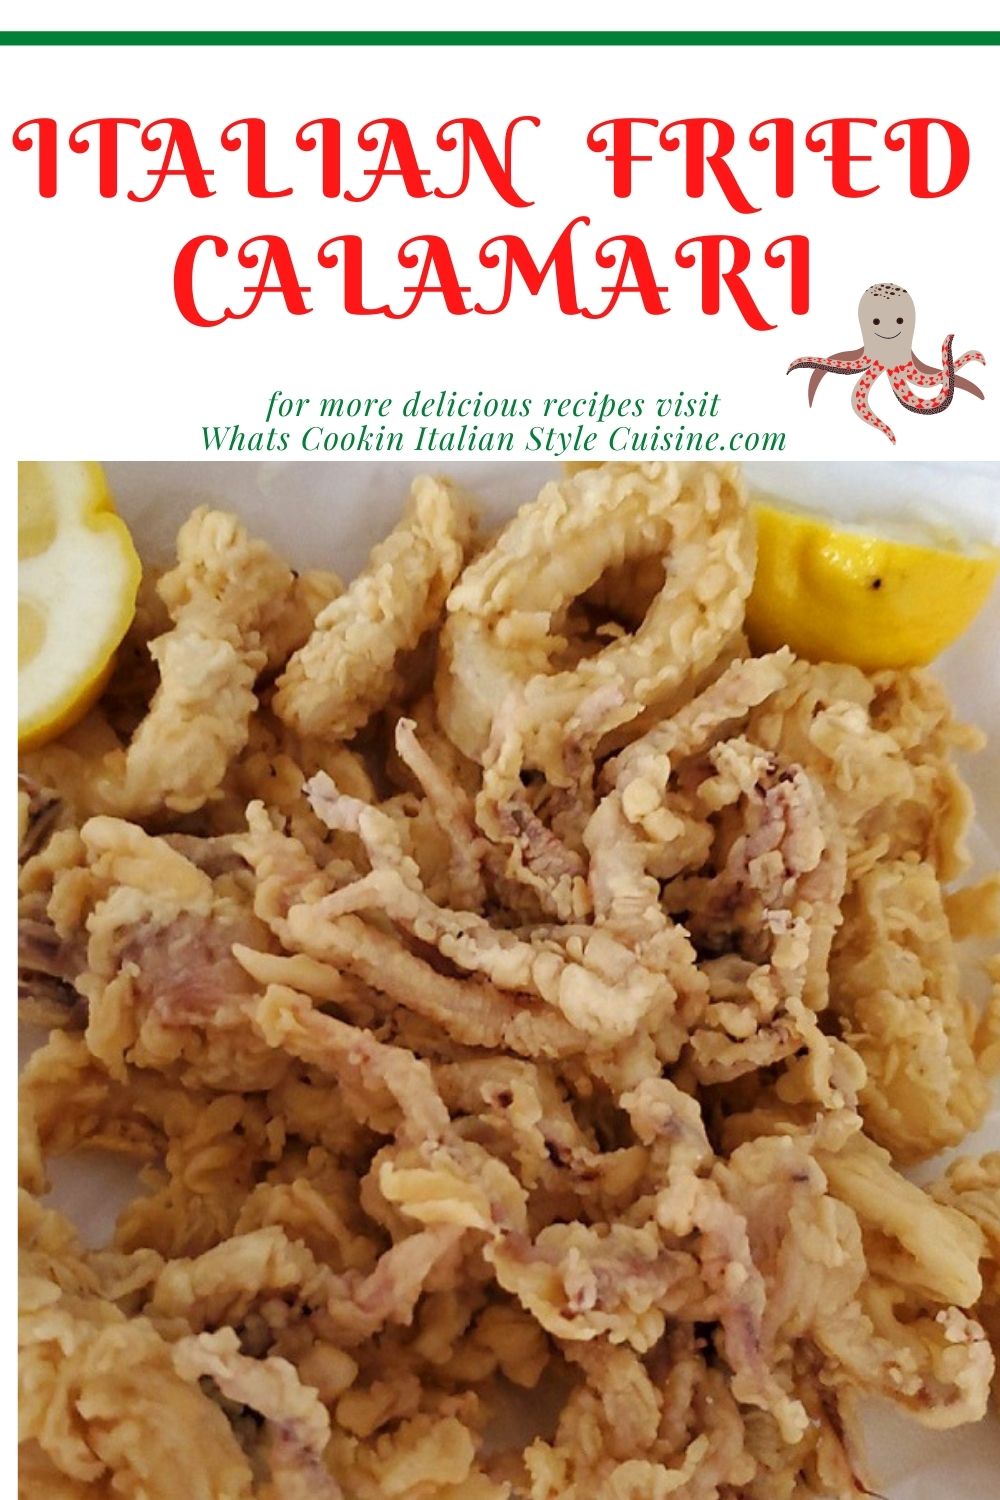 Italian Fried Calamari | What's Cookin' Italian Style Cuisine